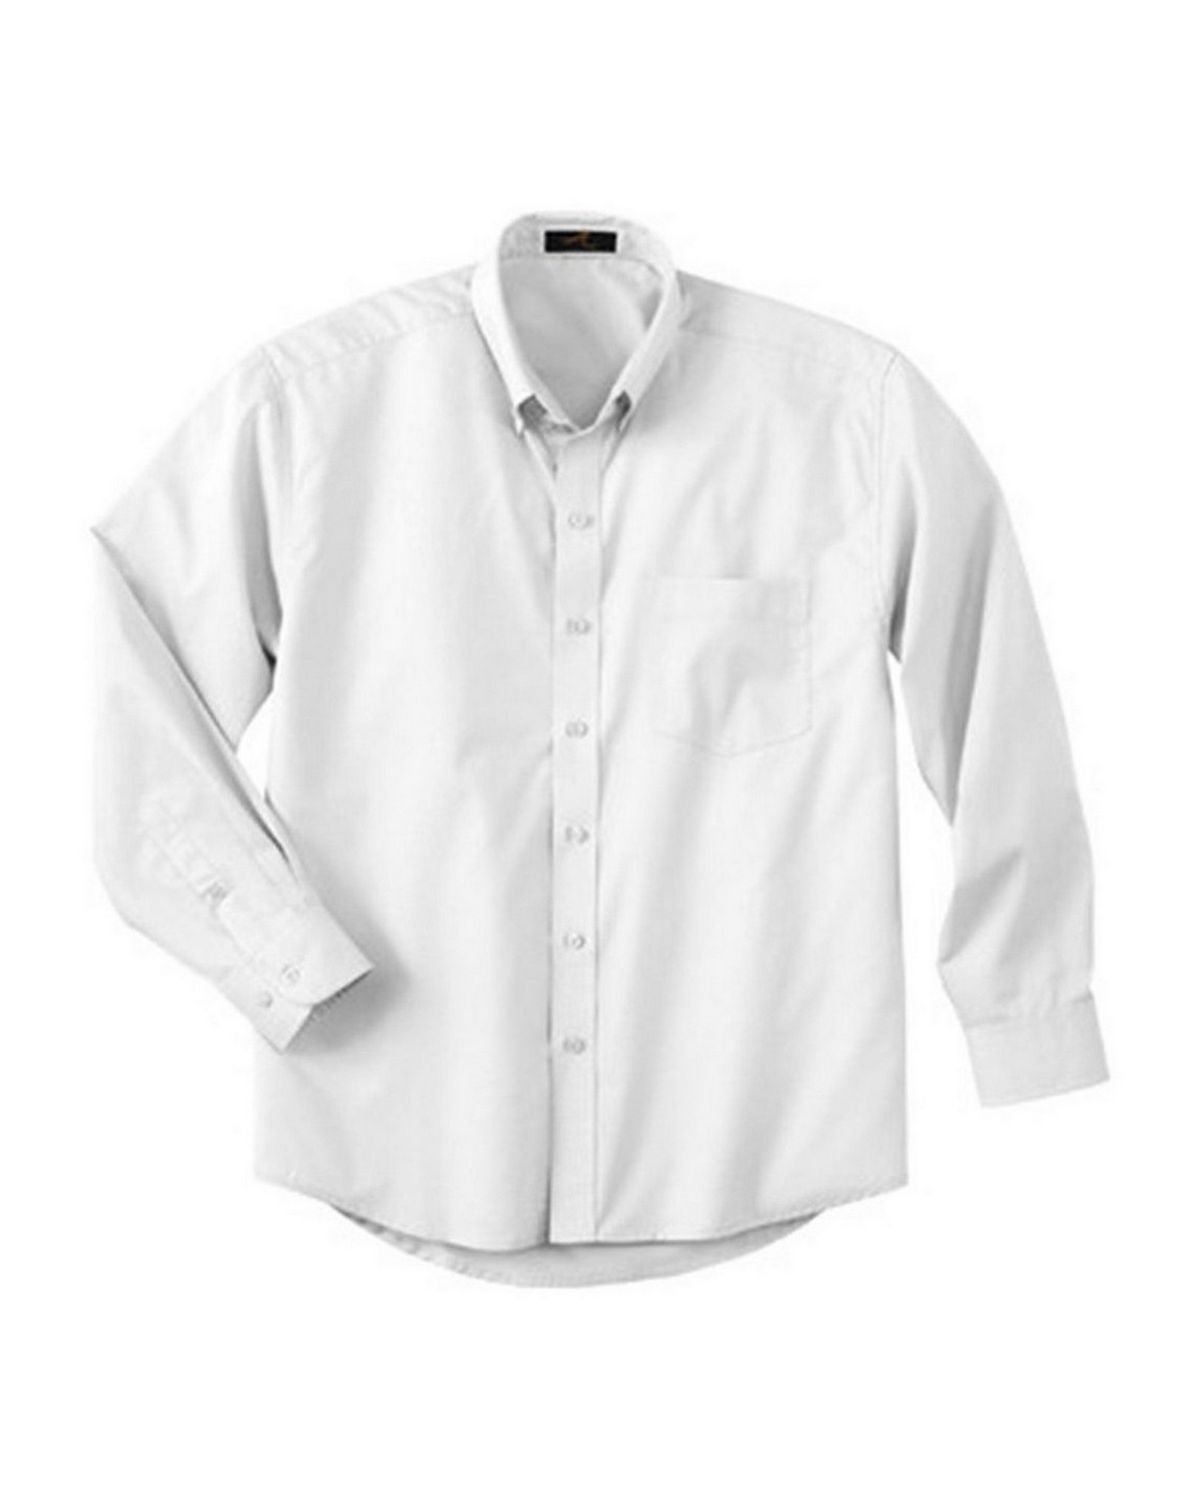 Ash City 87015T Men's Tall Long Sleeve Easy Care Twill Shirt